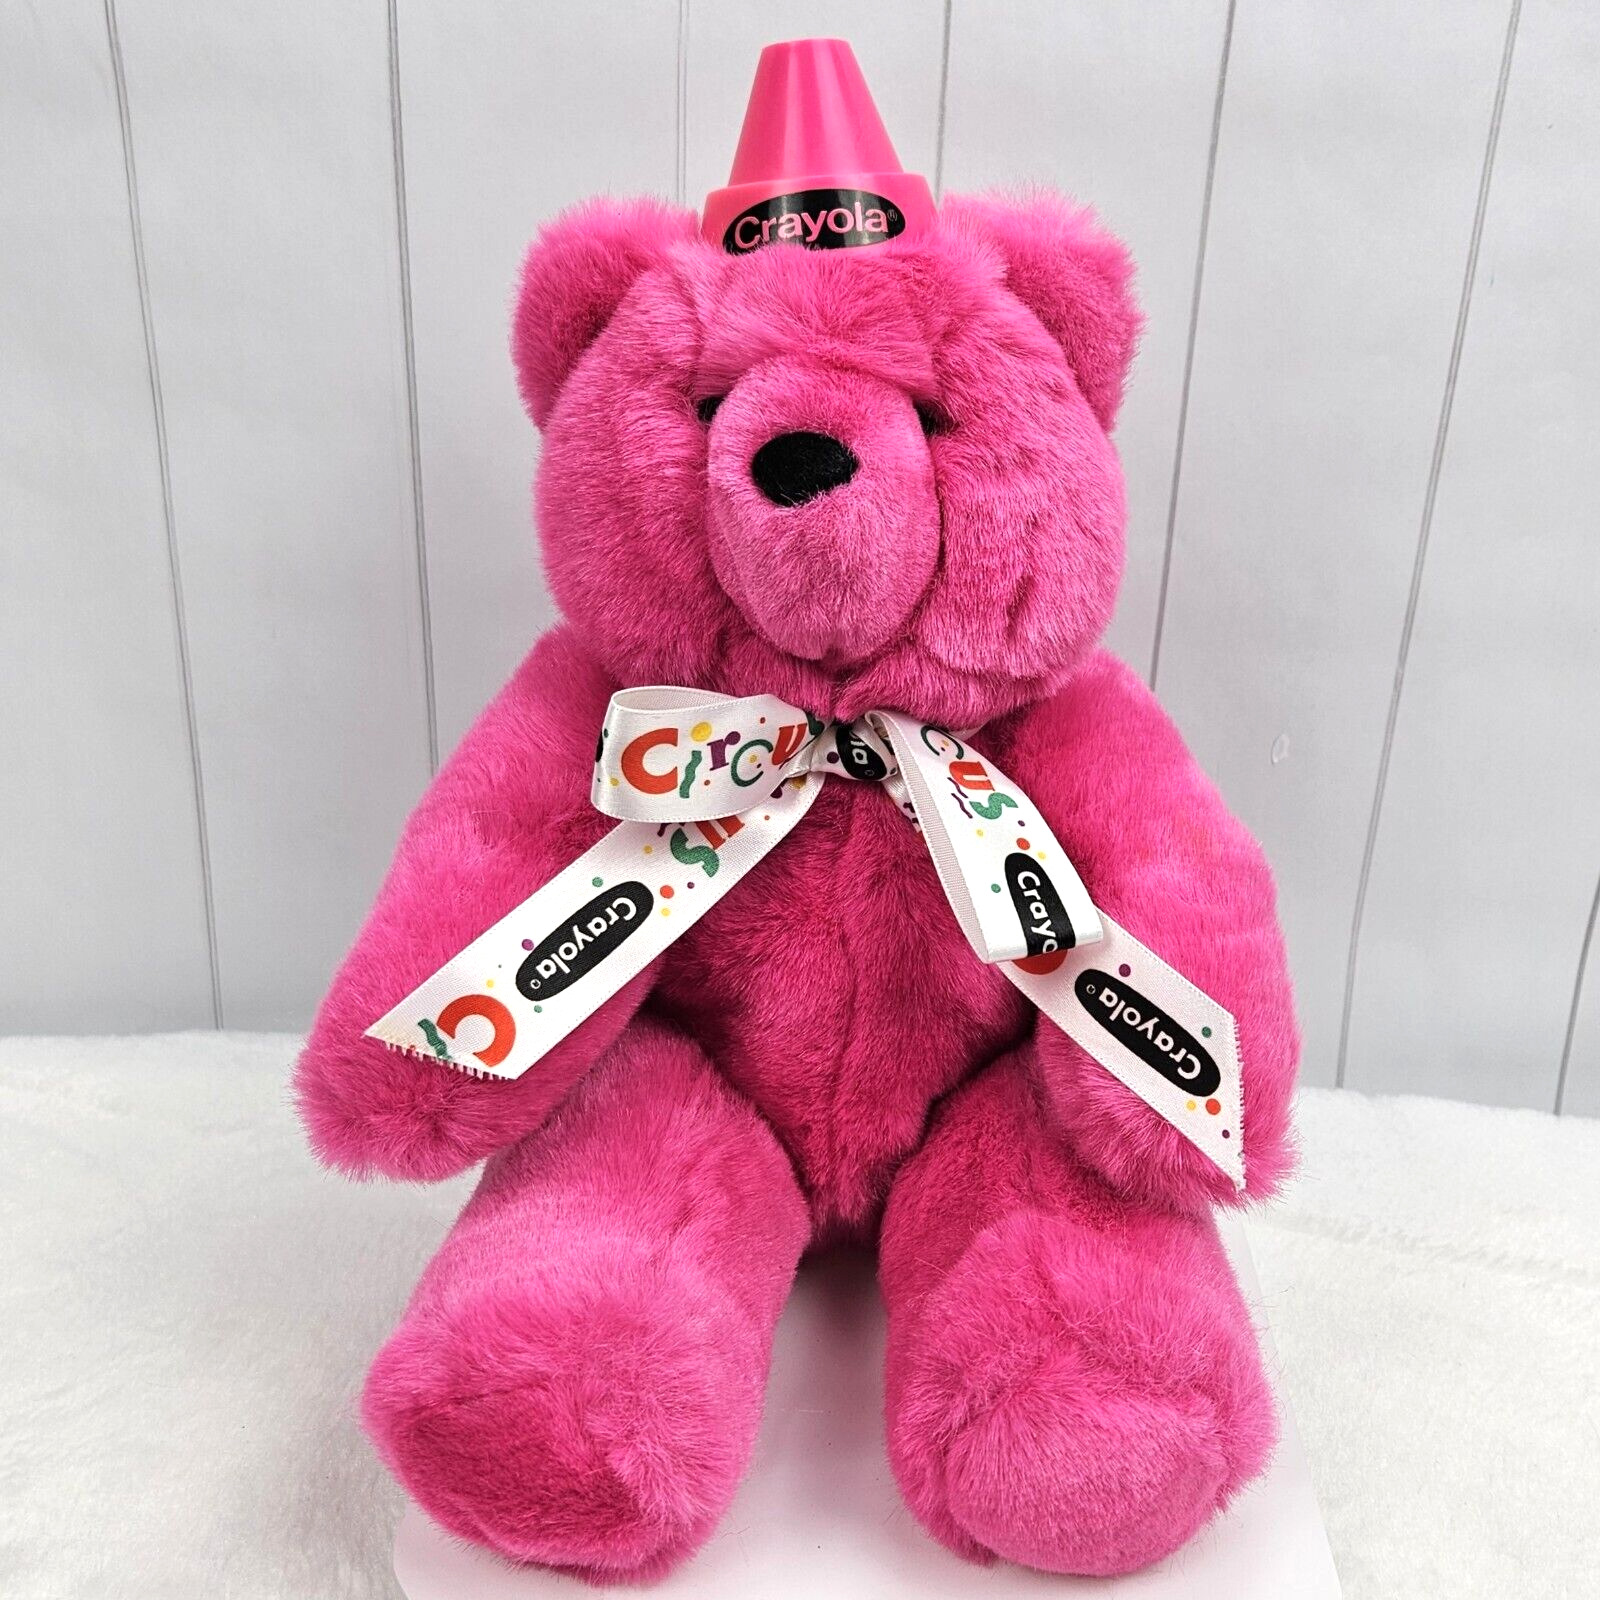 Crayola Perky Pink Teddy Bear Plush Circus White Bow Crayon Hat Vintage Korea